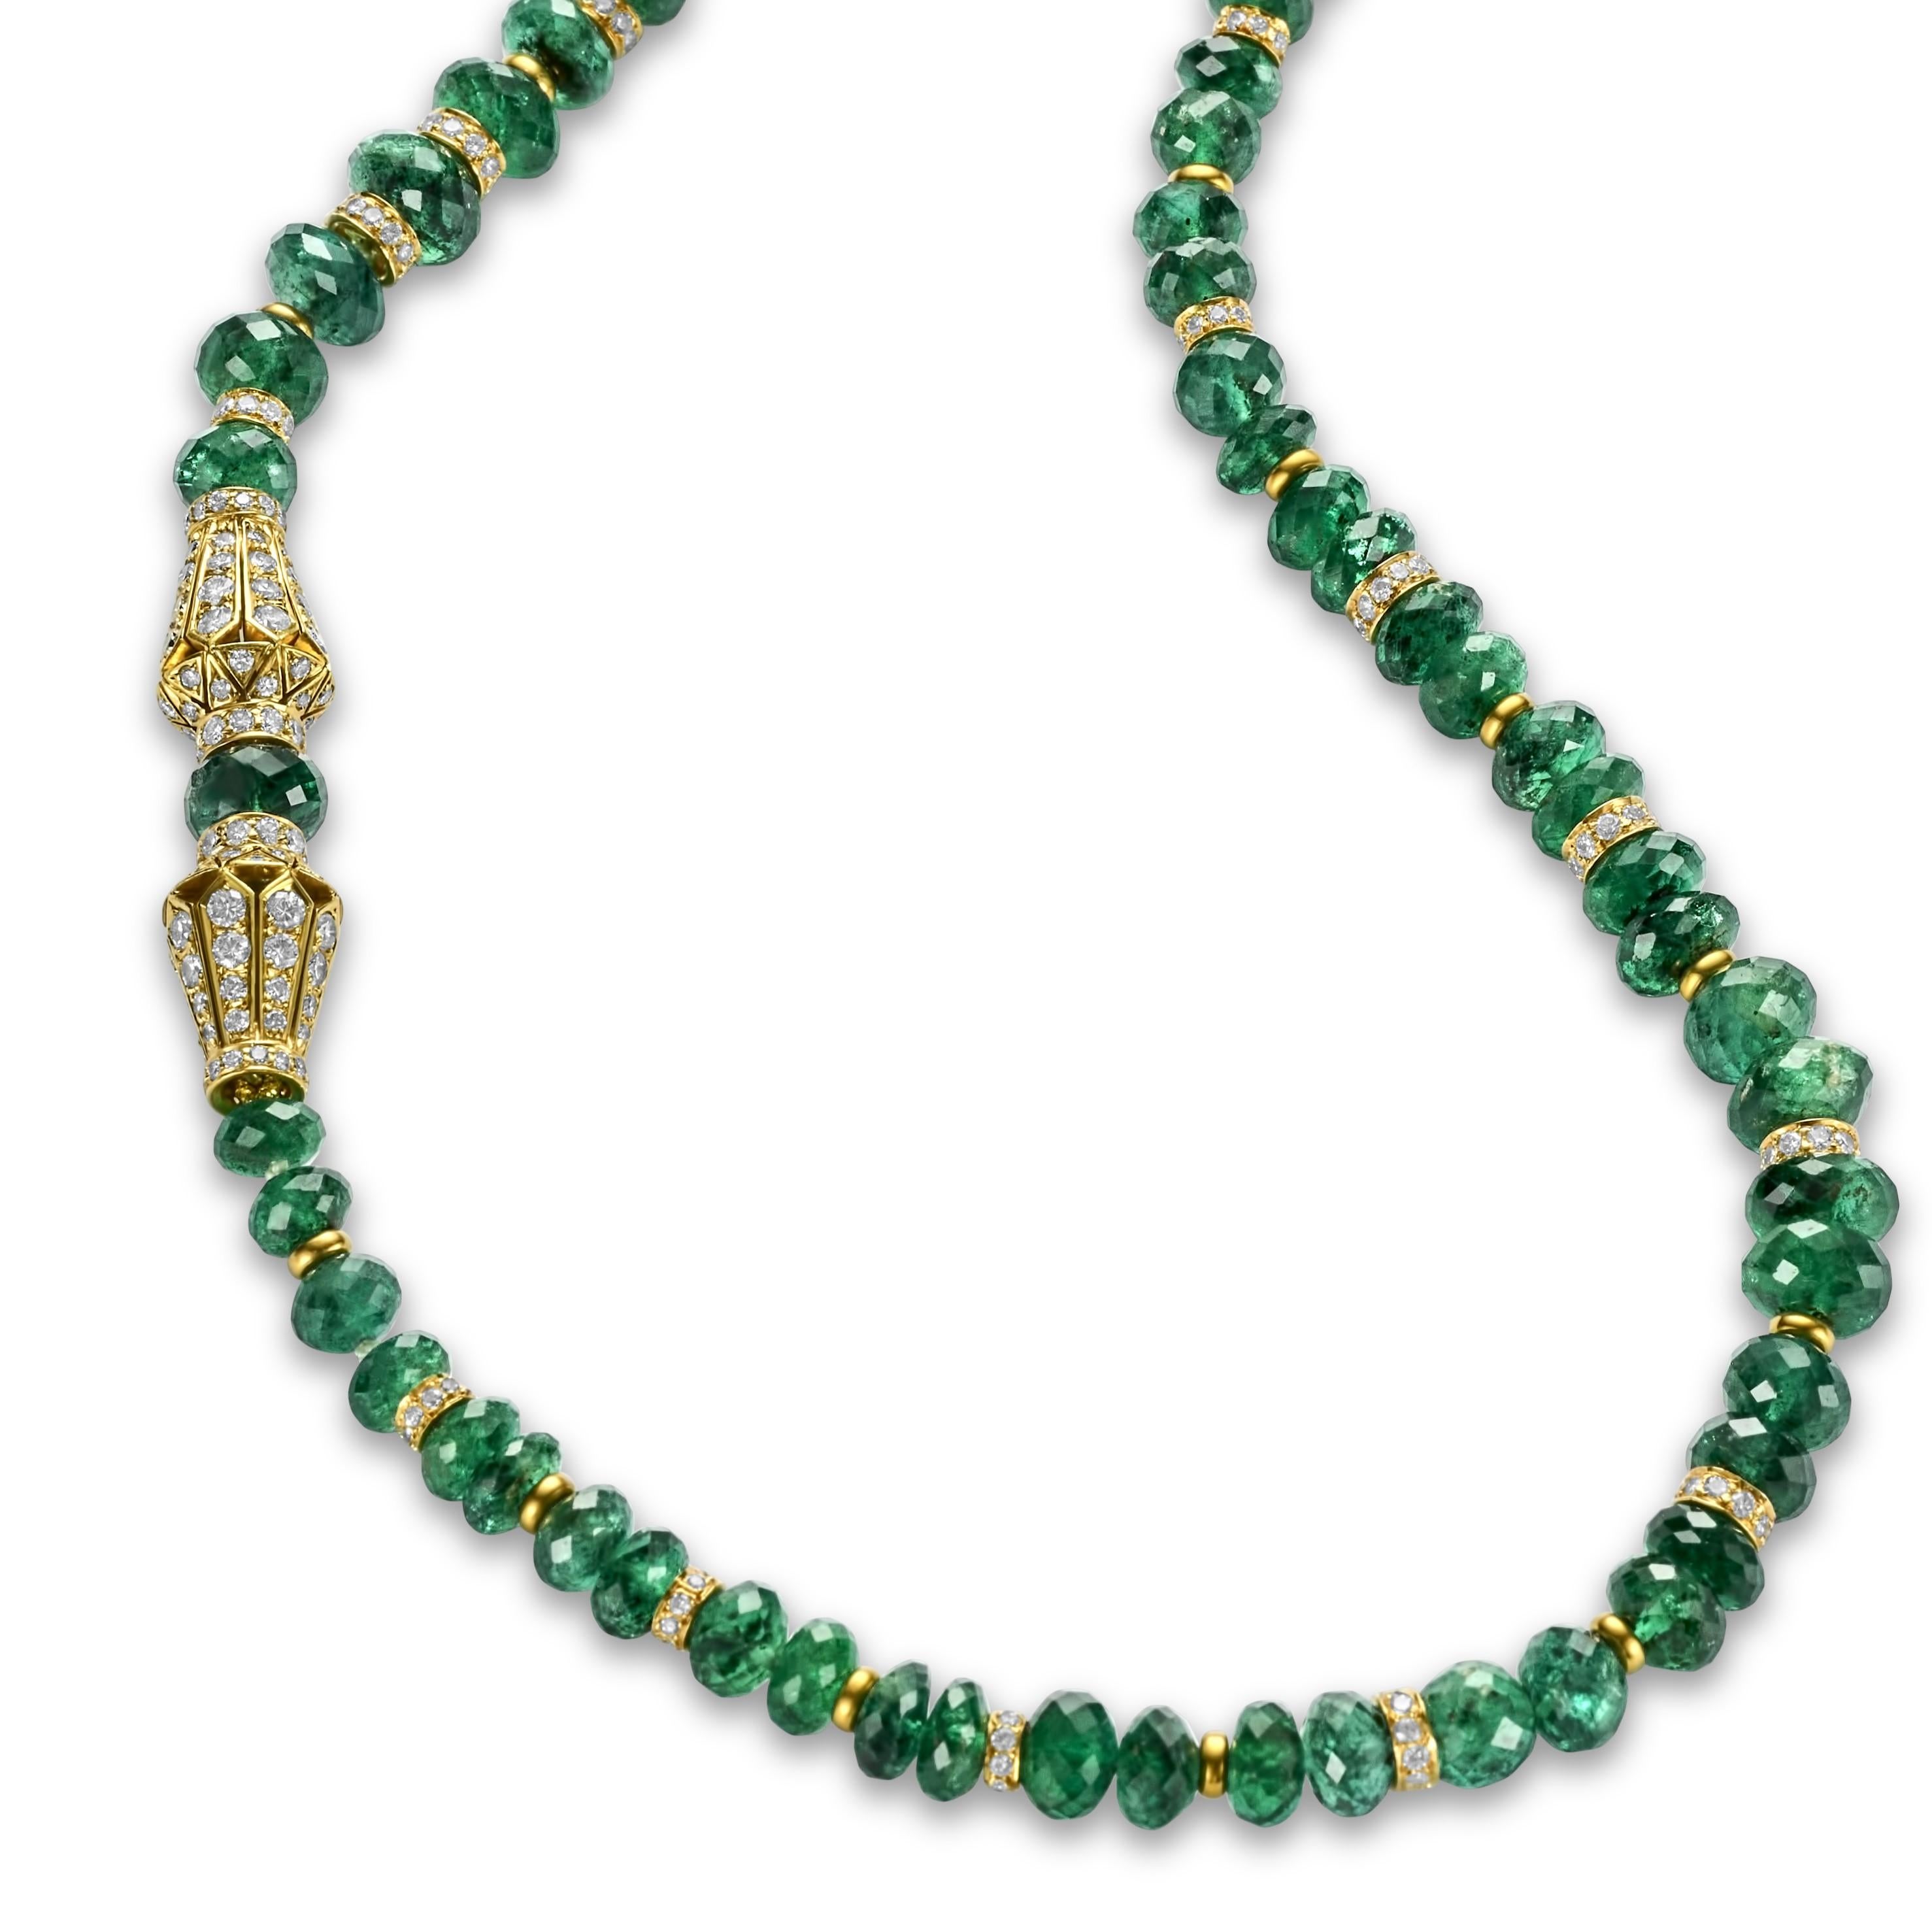 Adler Genèva 18kt Gold Necklaces 480ct Faceted Bead Emeralds CGL Certified For Sale 1